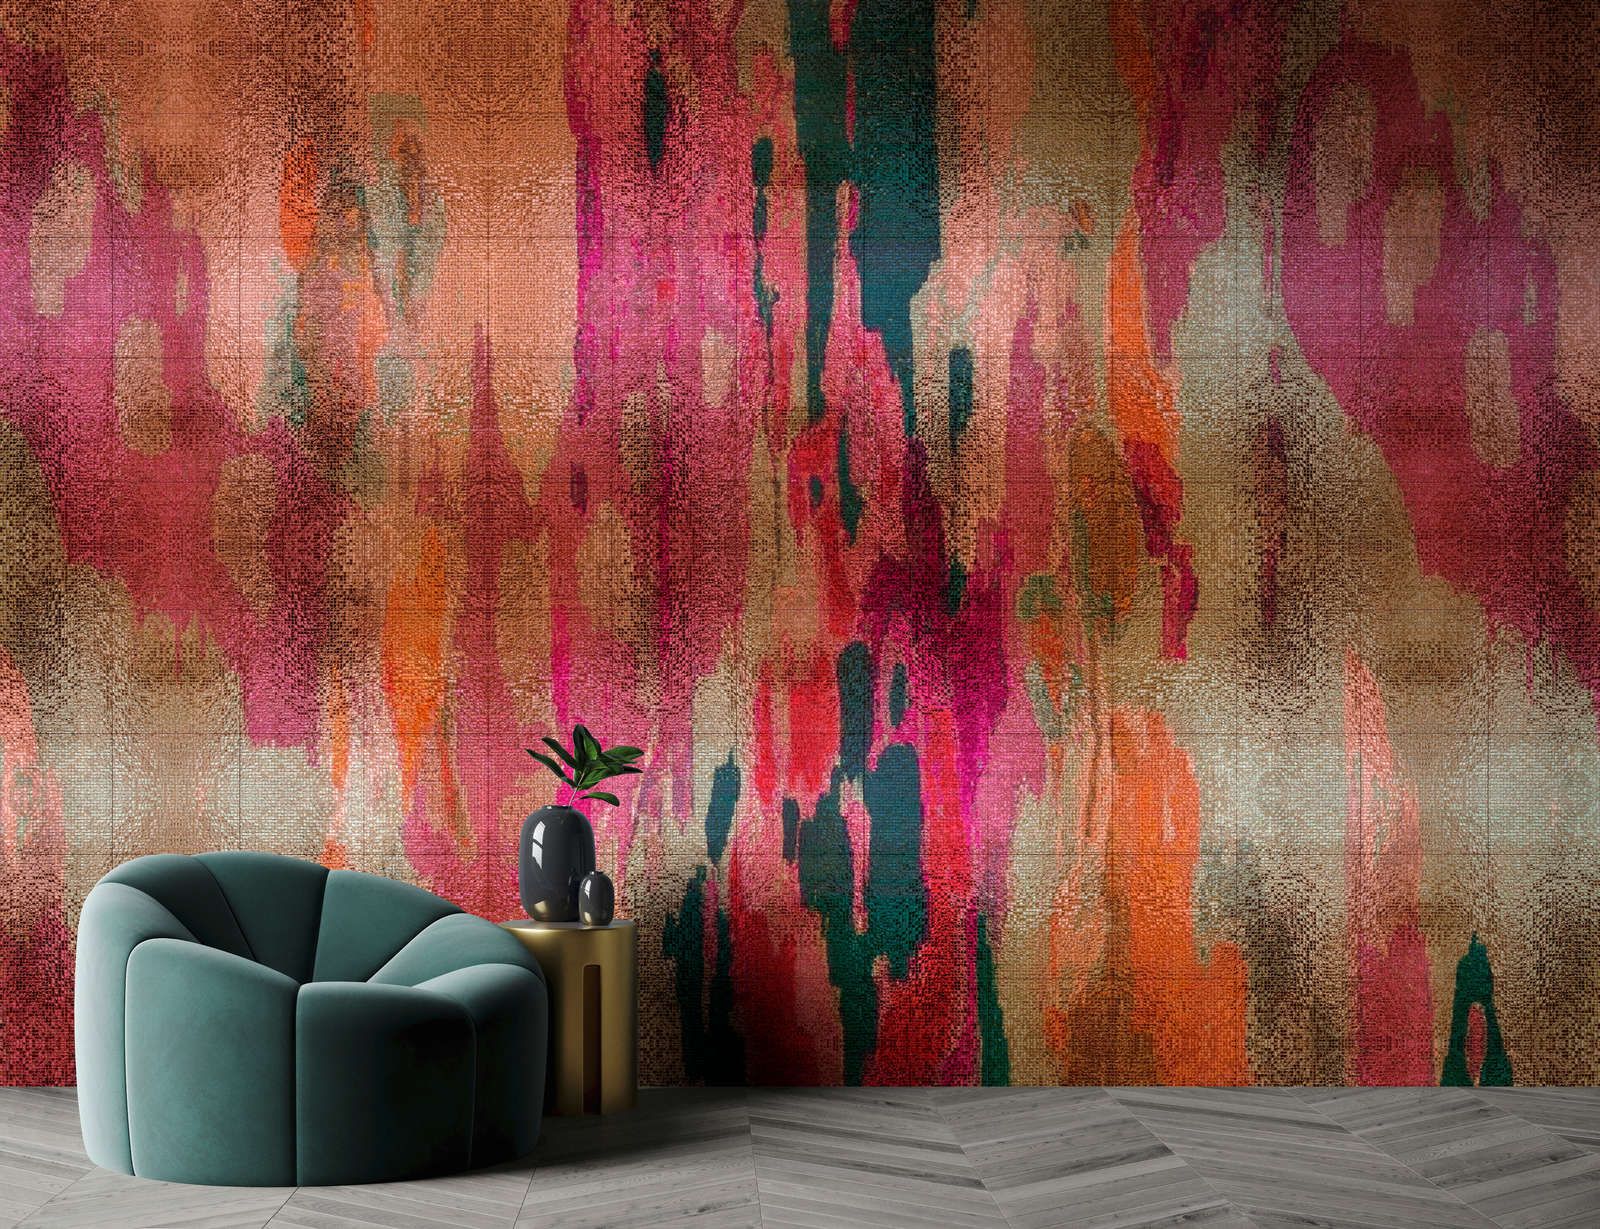             Digital behang »marielle 2« - kleurovergangen violet, oranje, petrol met mozaïekstructuur - mat, glad vlies
        